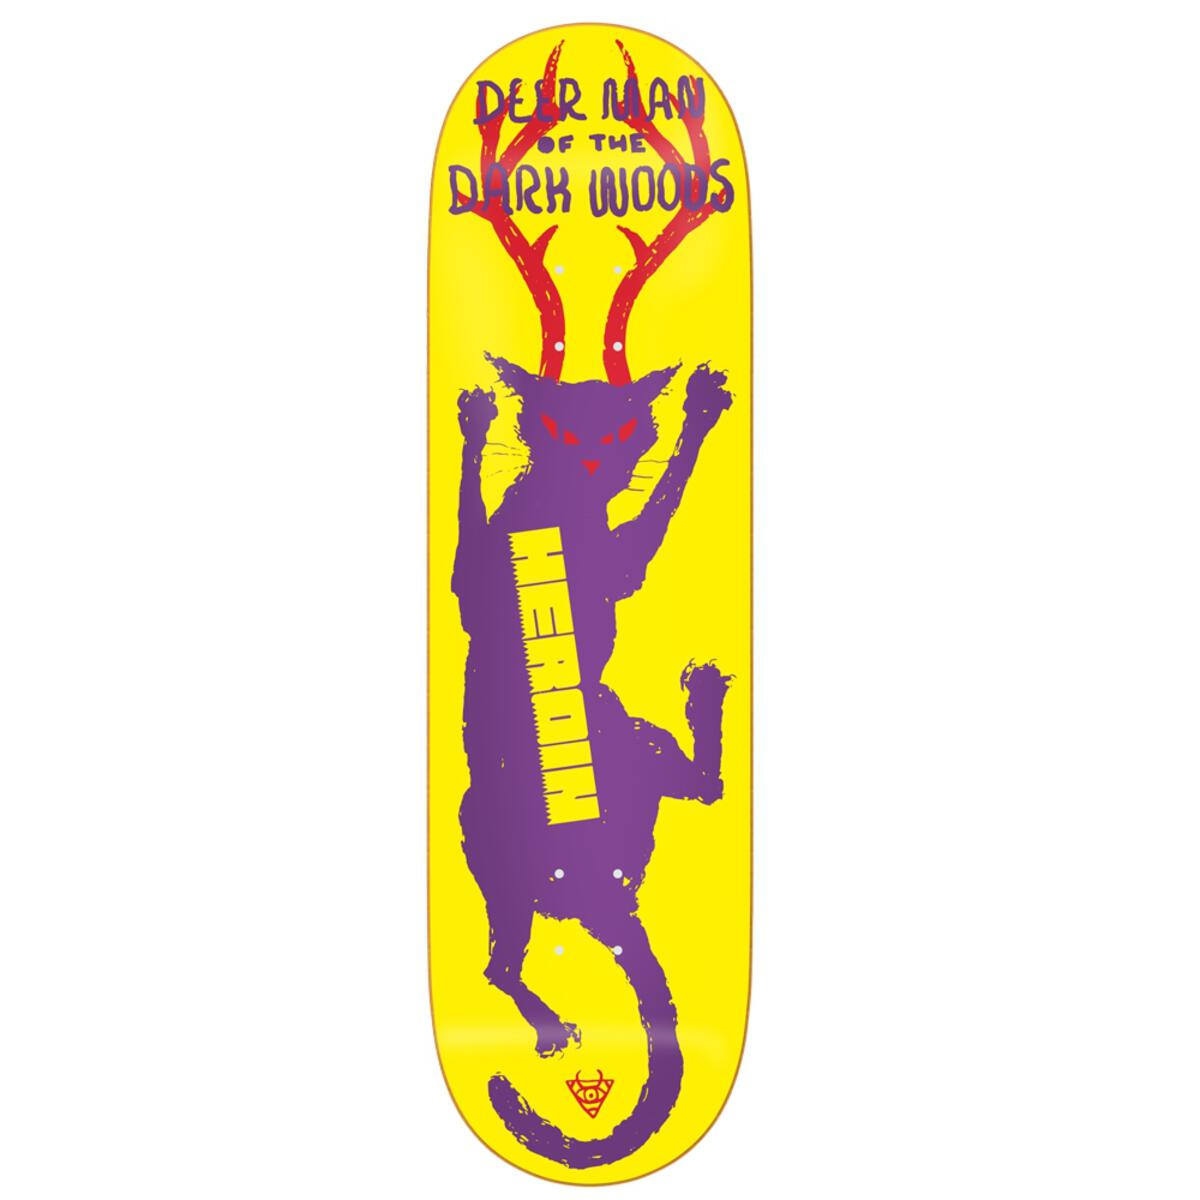 Heroin Deer Man of The Dark Woods Giallo 9.0" Skateboard Deck